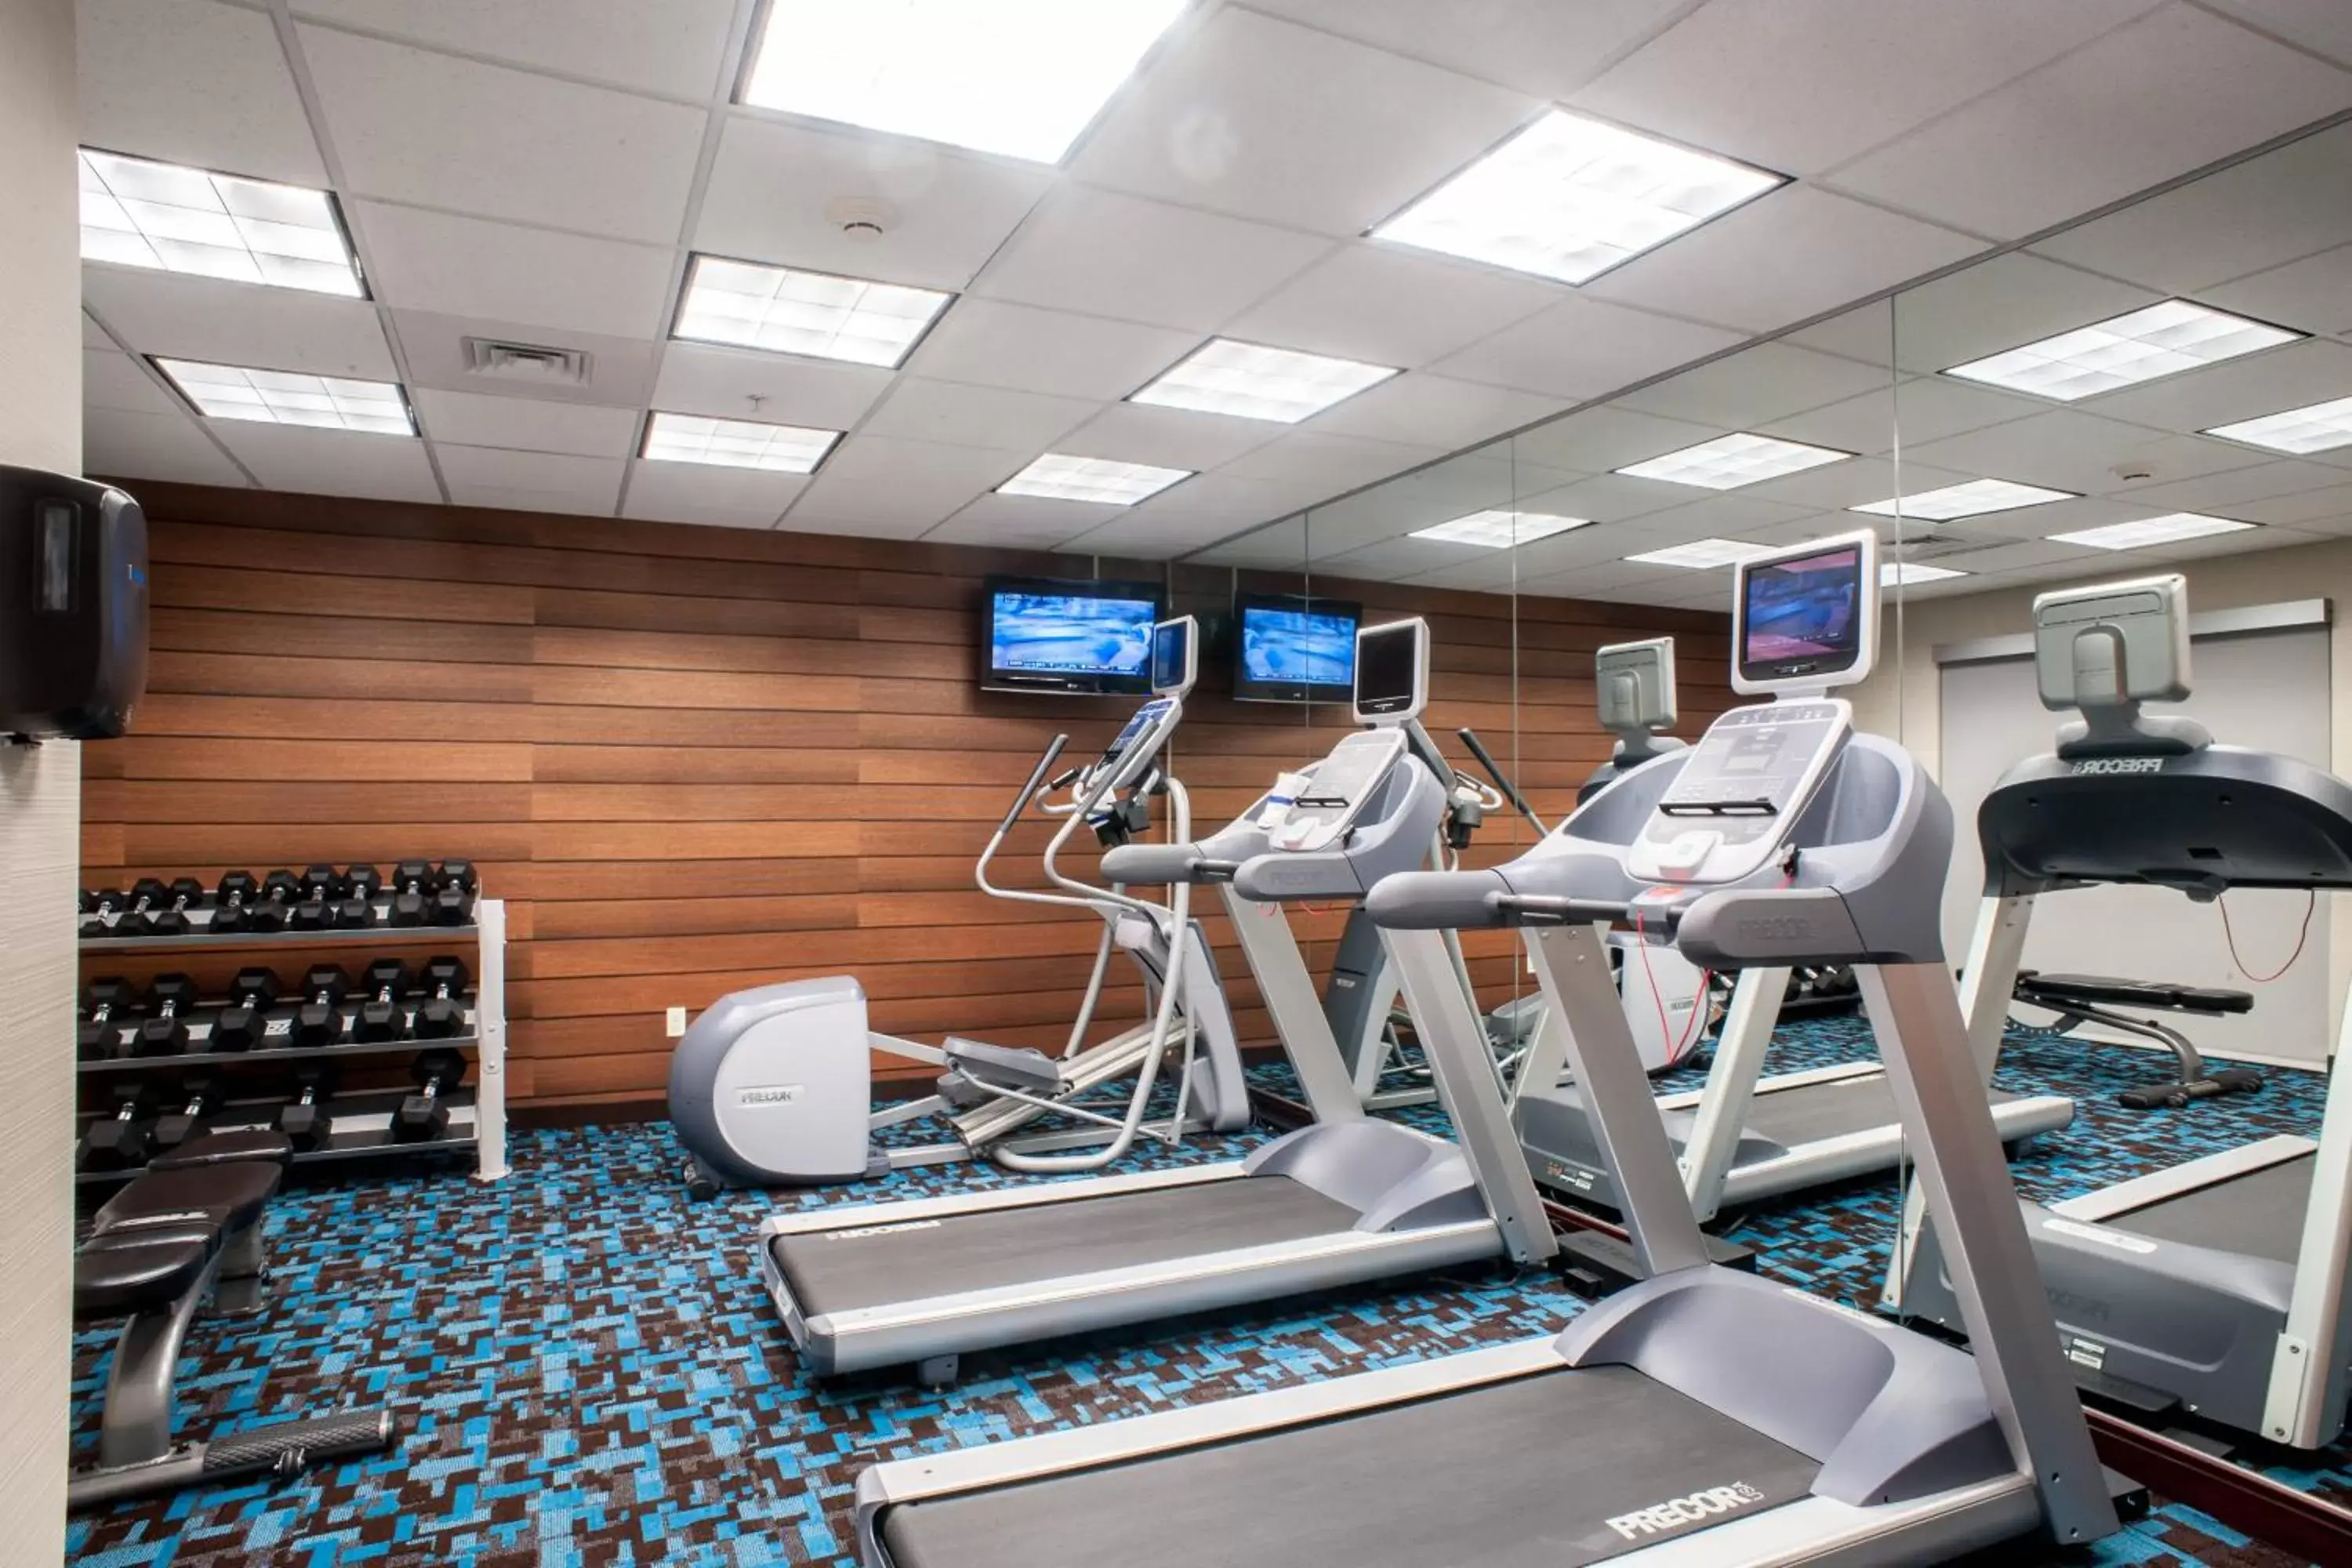 Fitness centre/facilities, Fitness Center/Facilities in Fairfield Inn & Suites Clovis